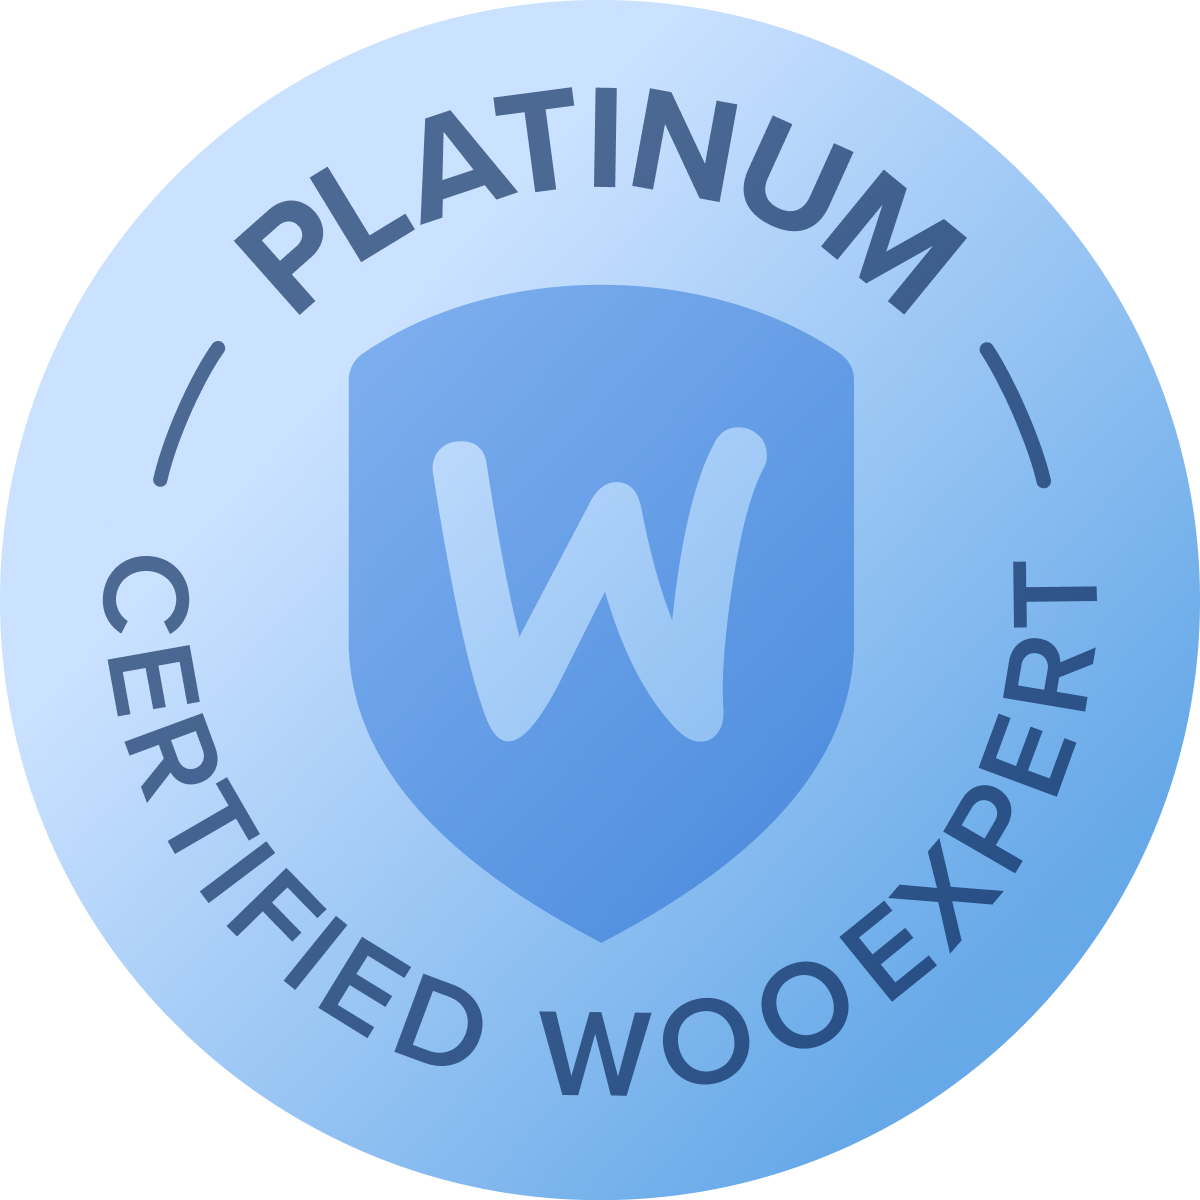 woocommerce certified